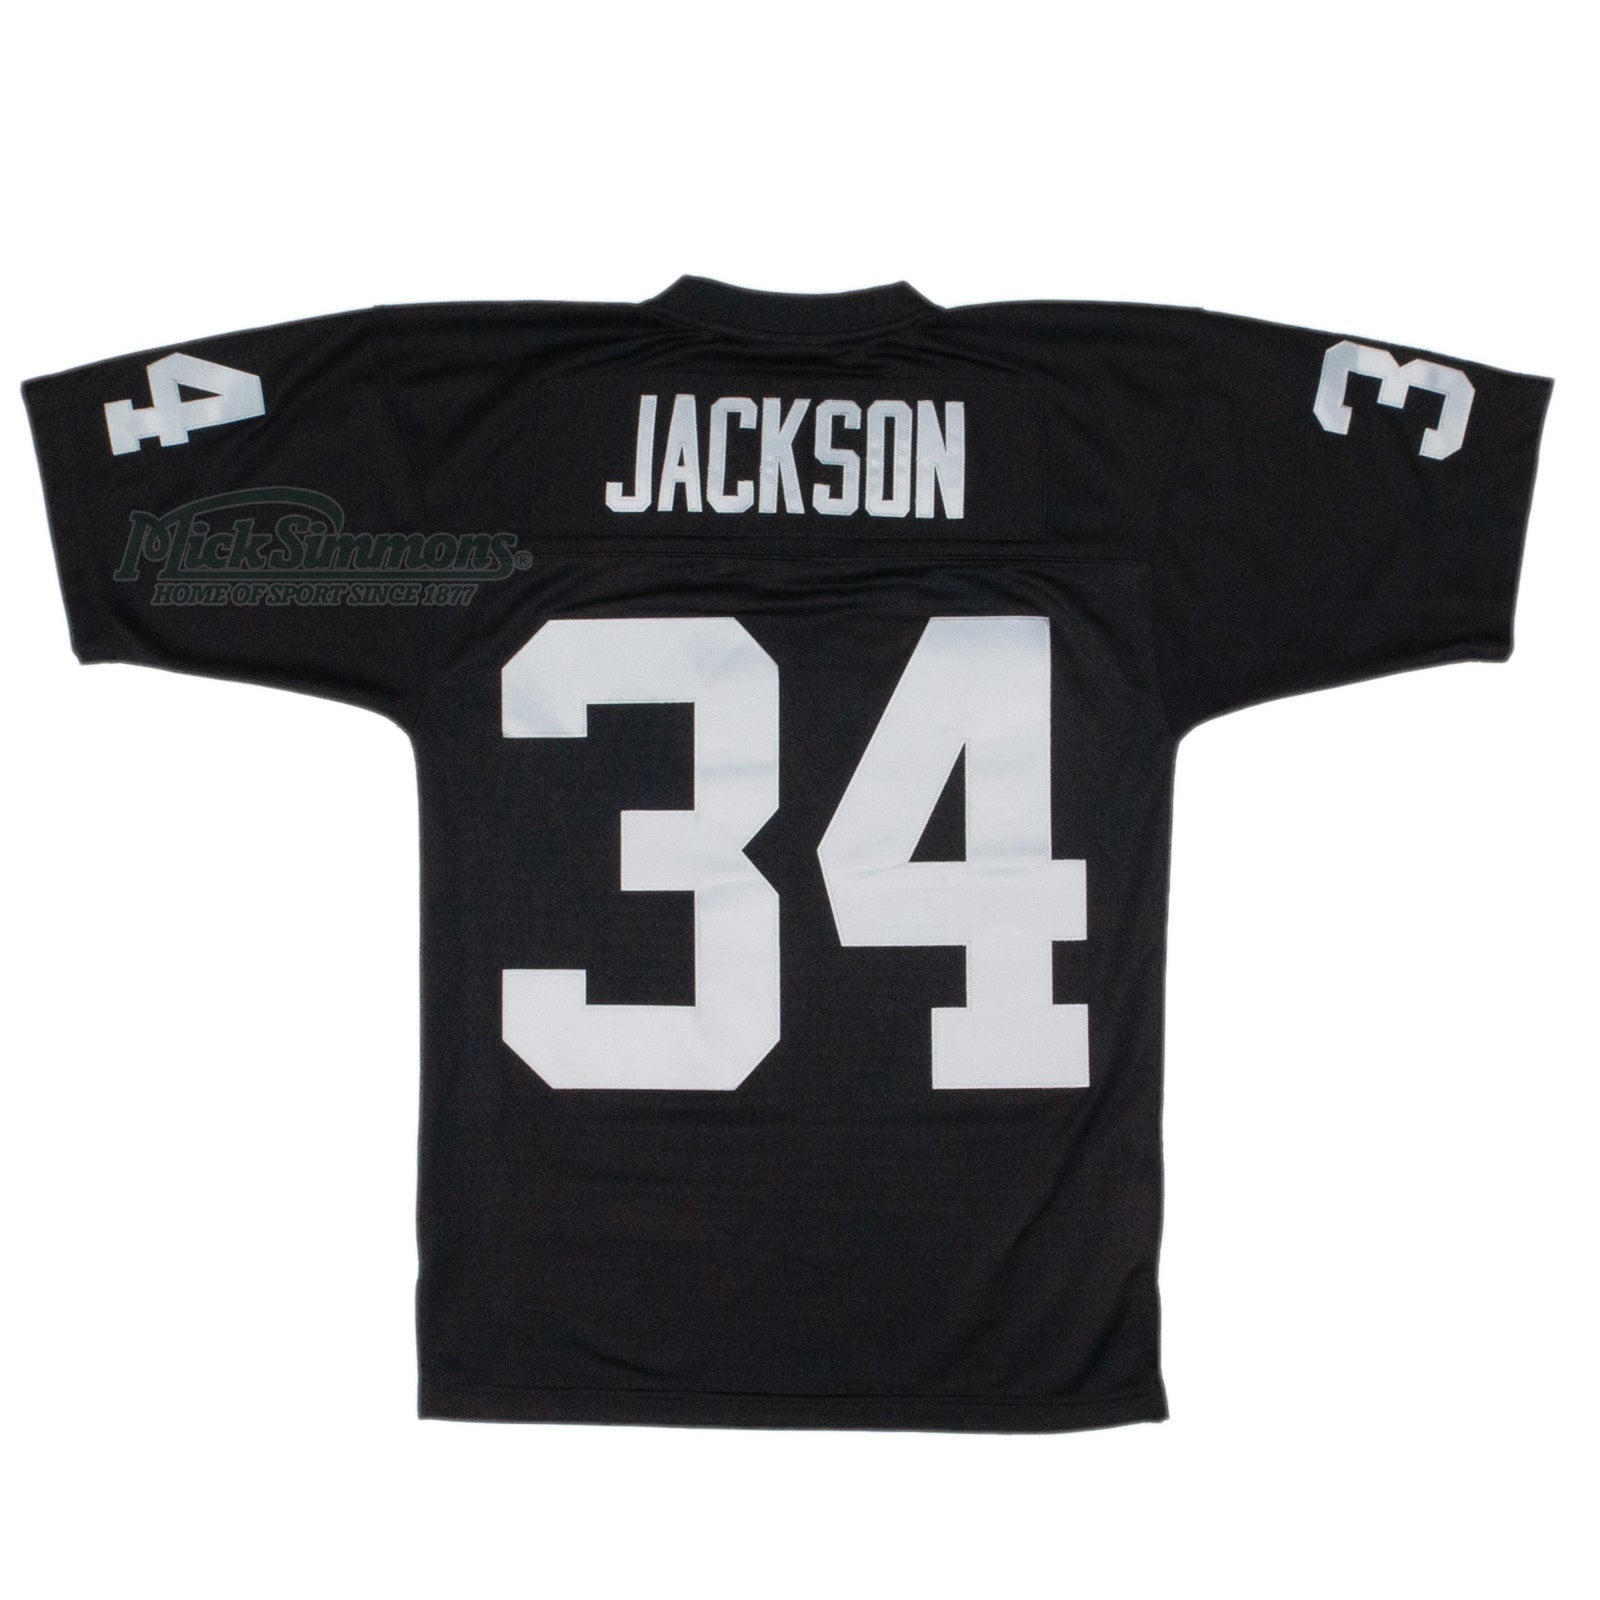 Mitchell & Ness Legacy Jersey Los Angeles Raiders 1988 Bo Jackson